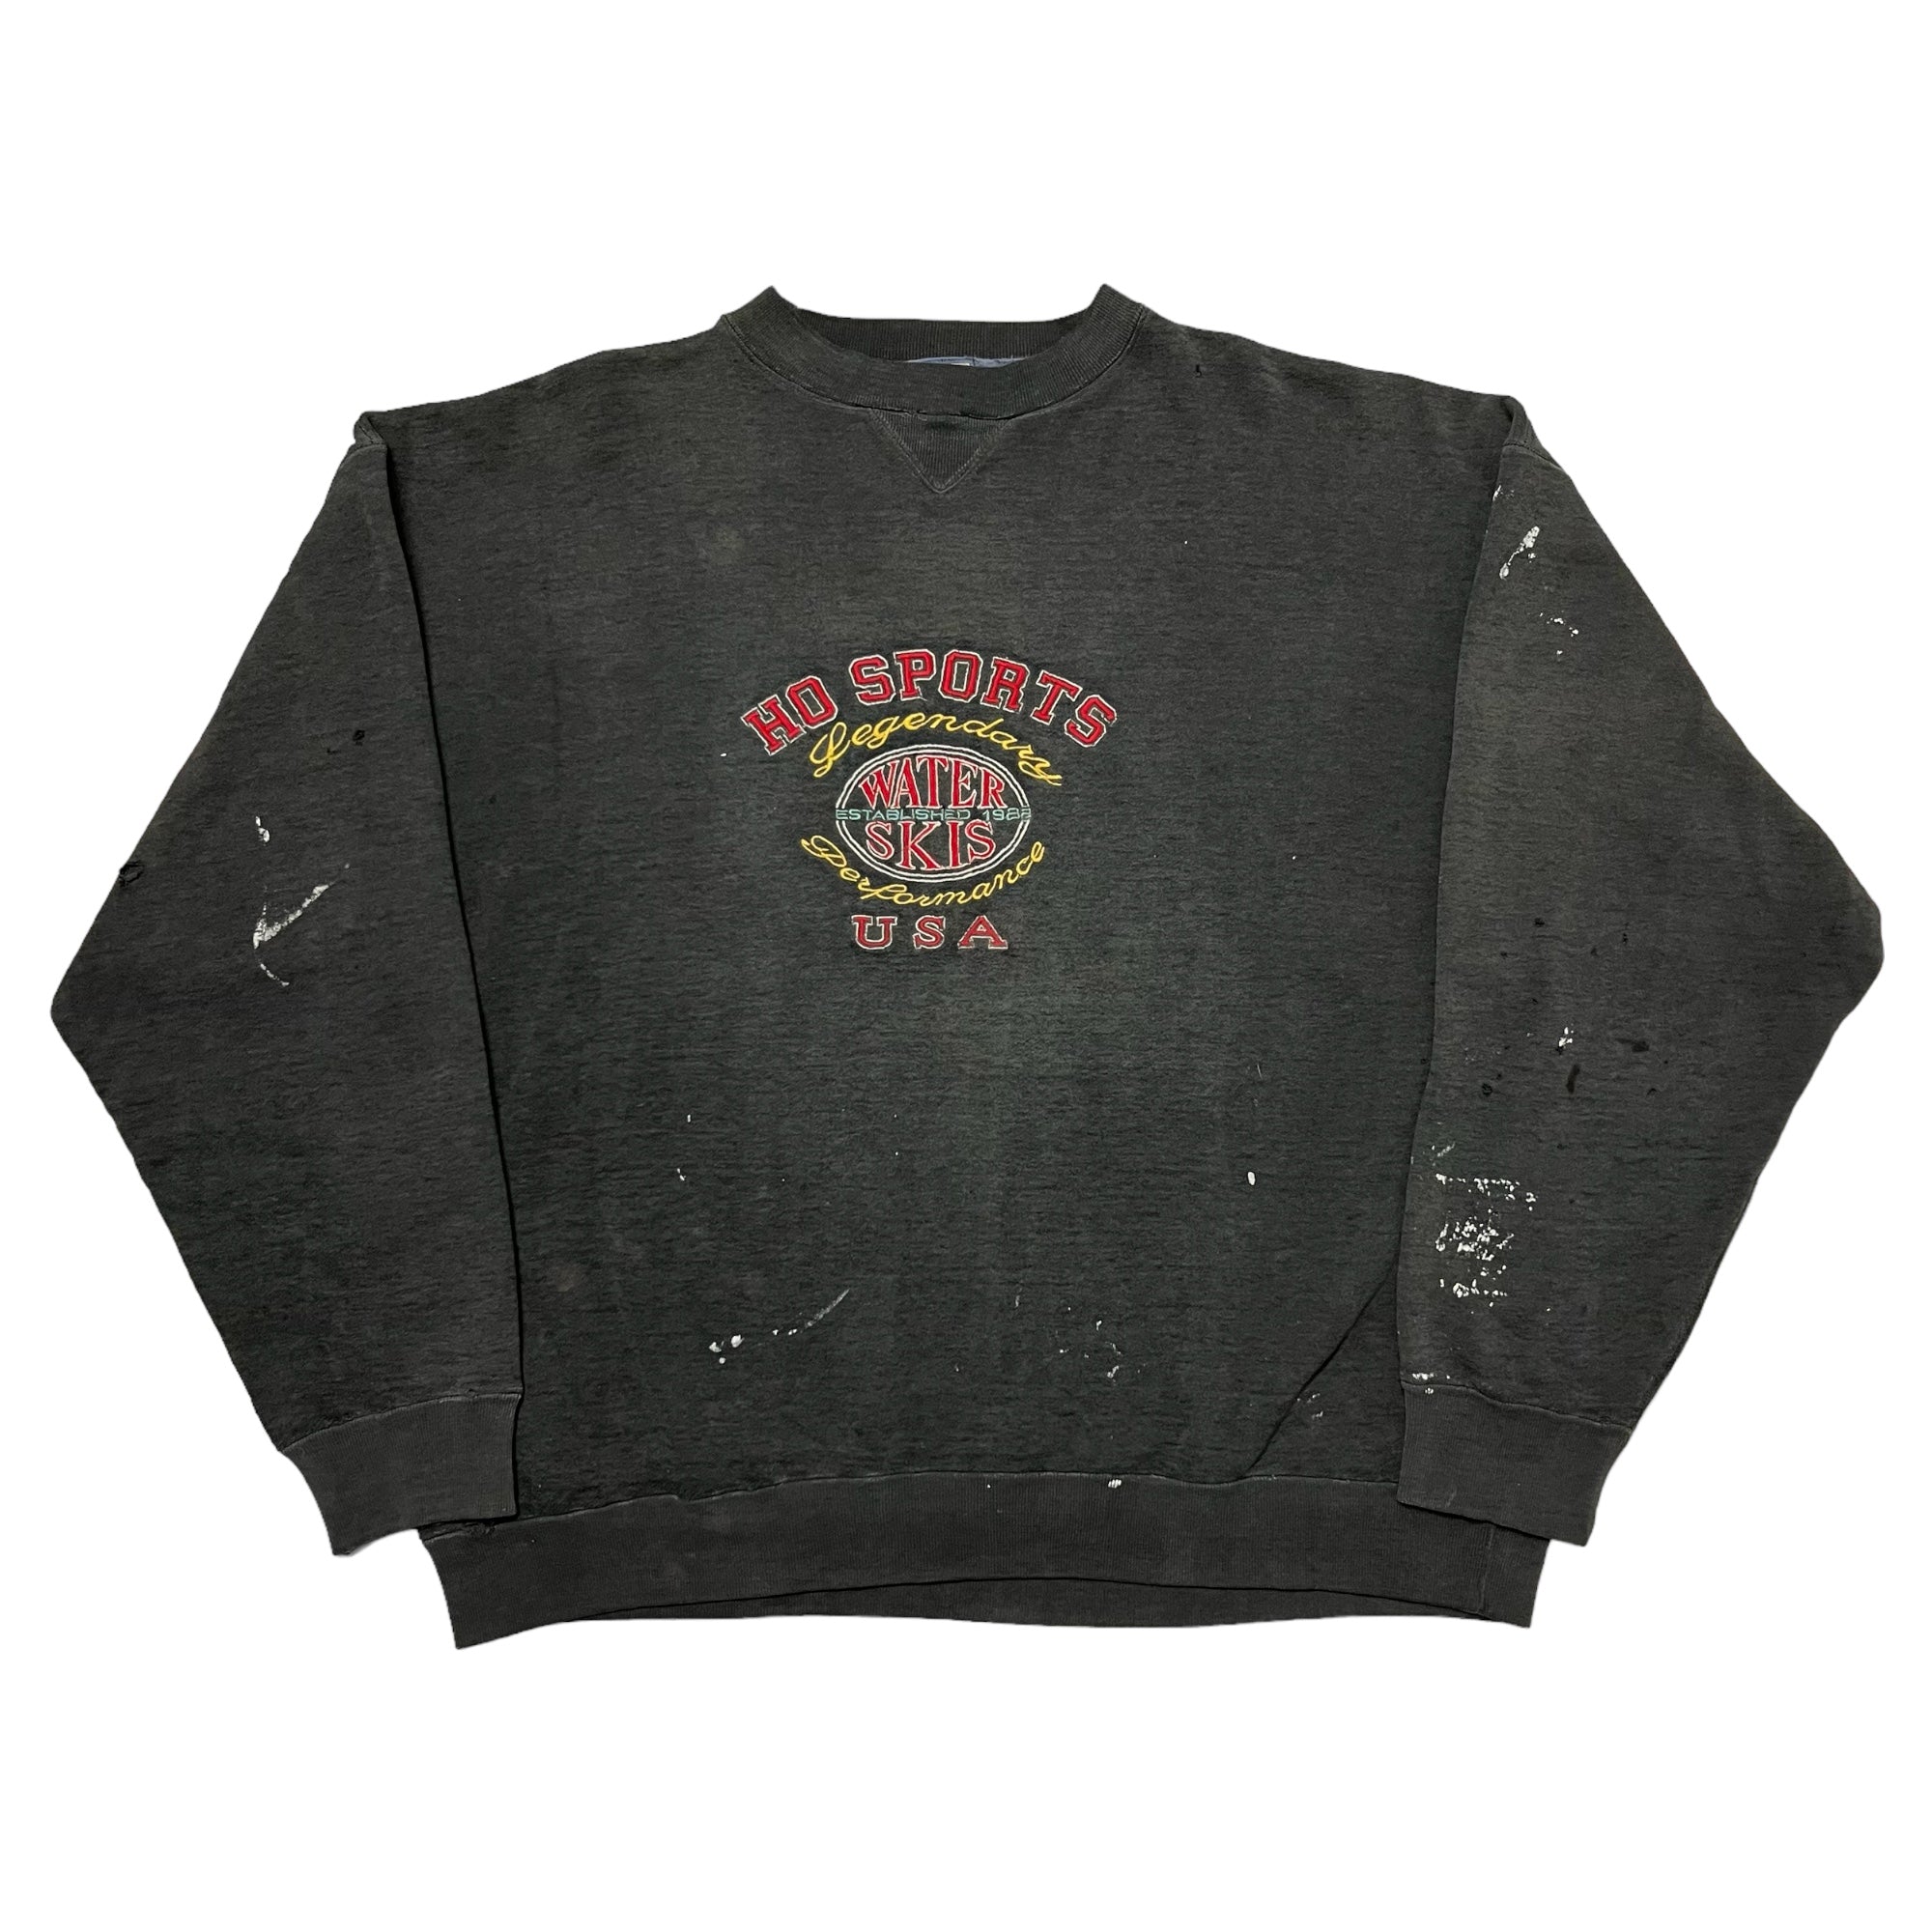 1990s Embroidered ‘Ho Sports’ Distressed Crewneck Sweatshirt - Sun Faded Black - XL